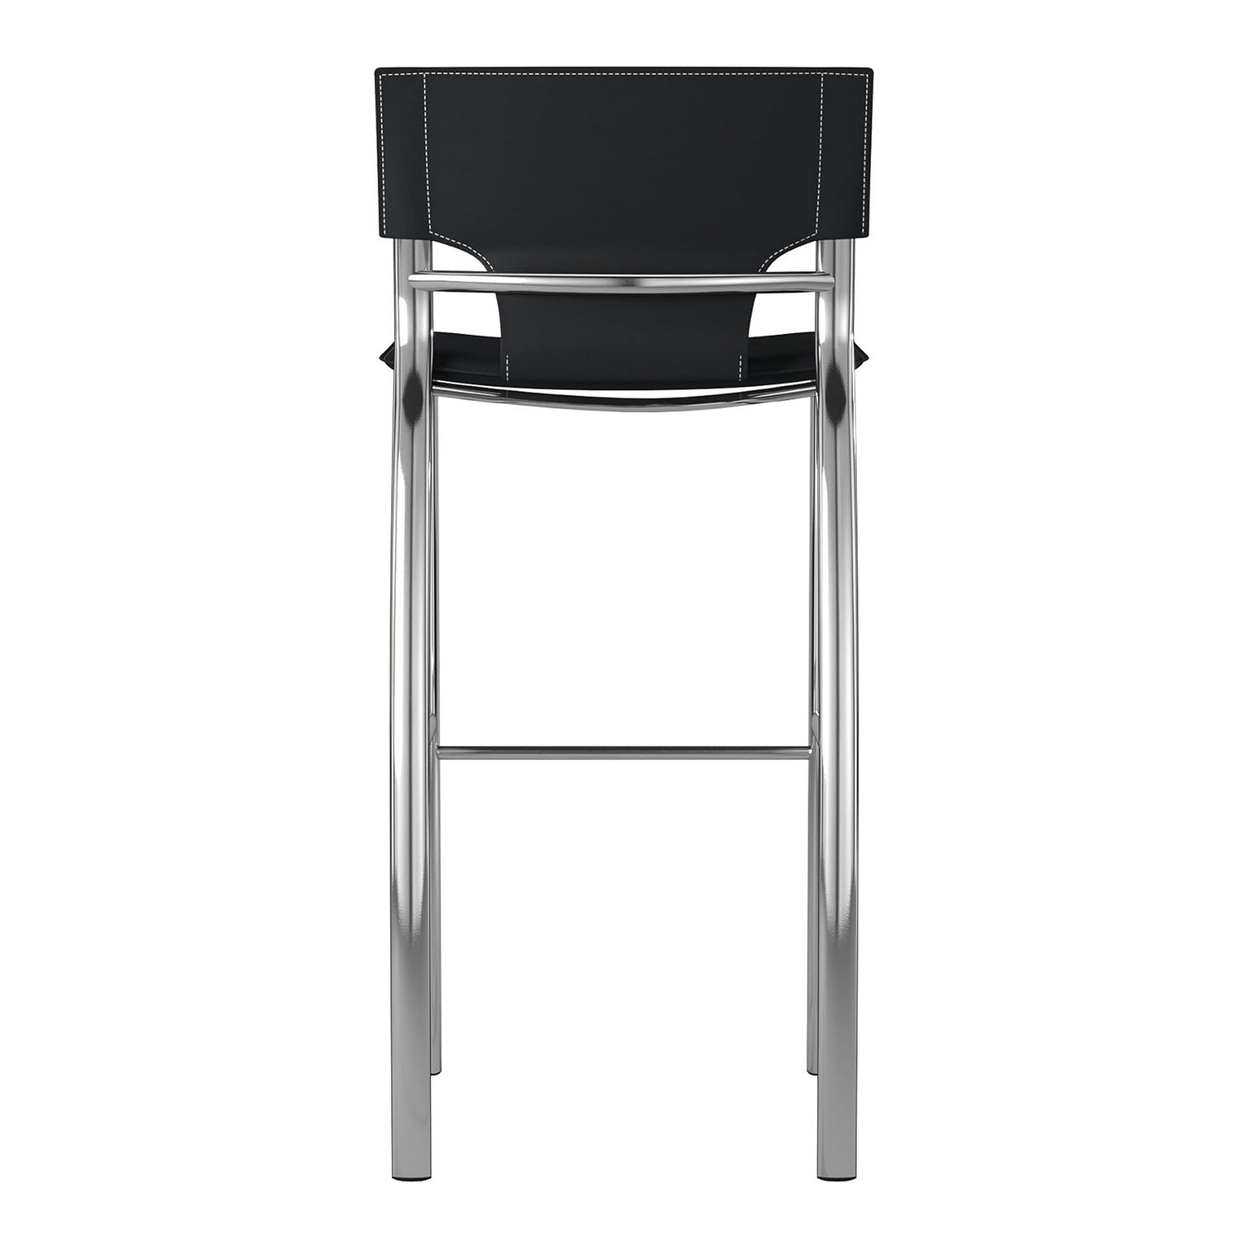 Illa 26 Inch Counter Height Chair, Set Of 2, Chrome Base, Vegan Leather, Black - Saltoro Sherpi